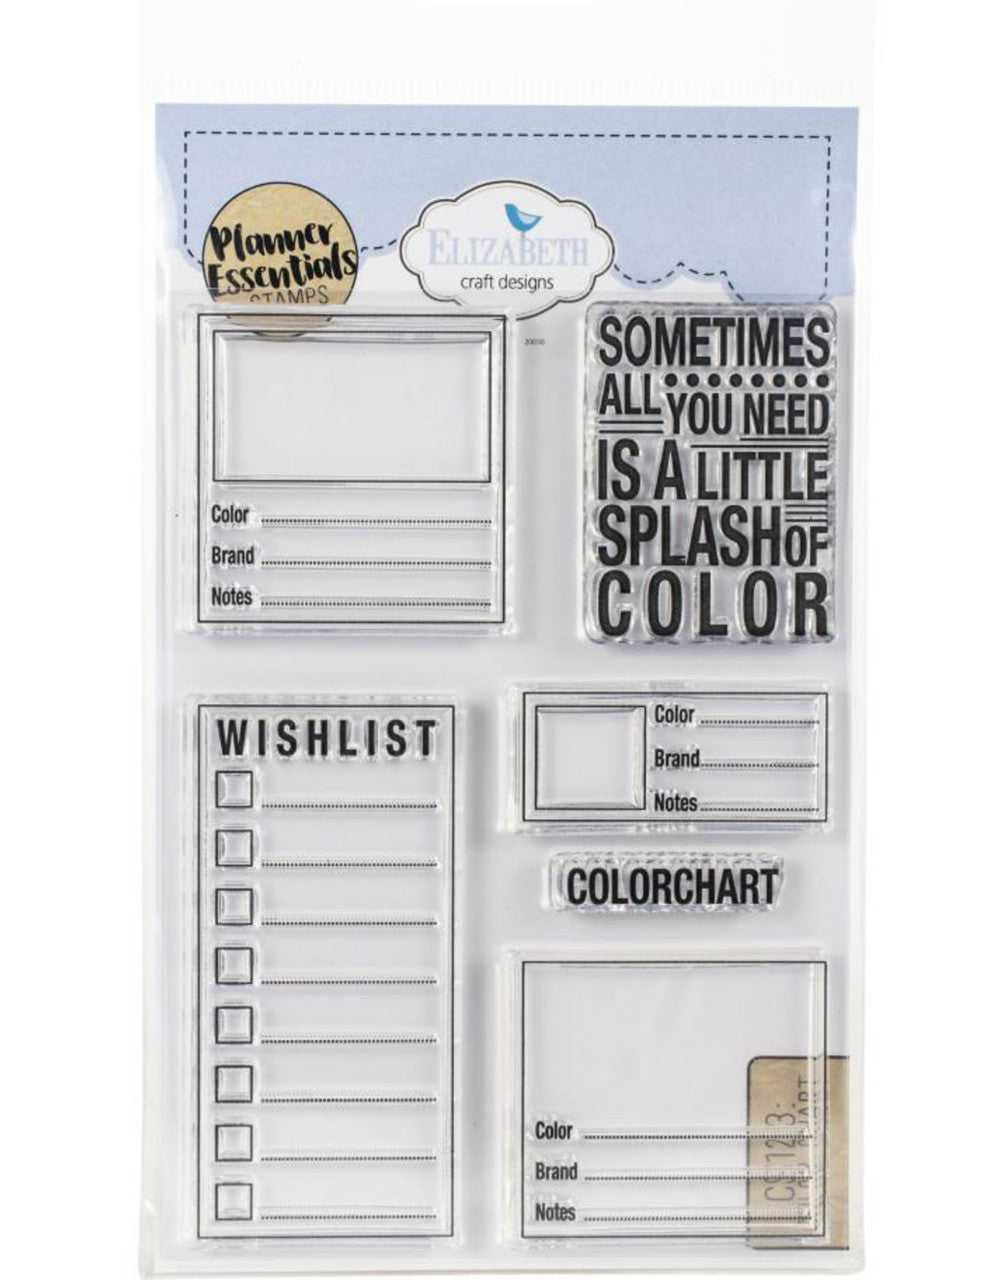 Elizabeth Craft Planner Essentials Stamps Color Chart